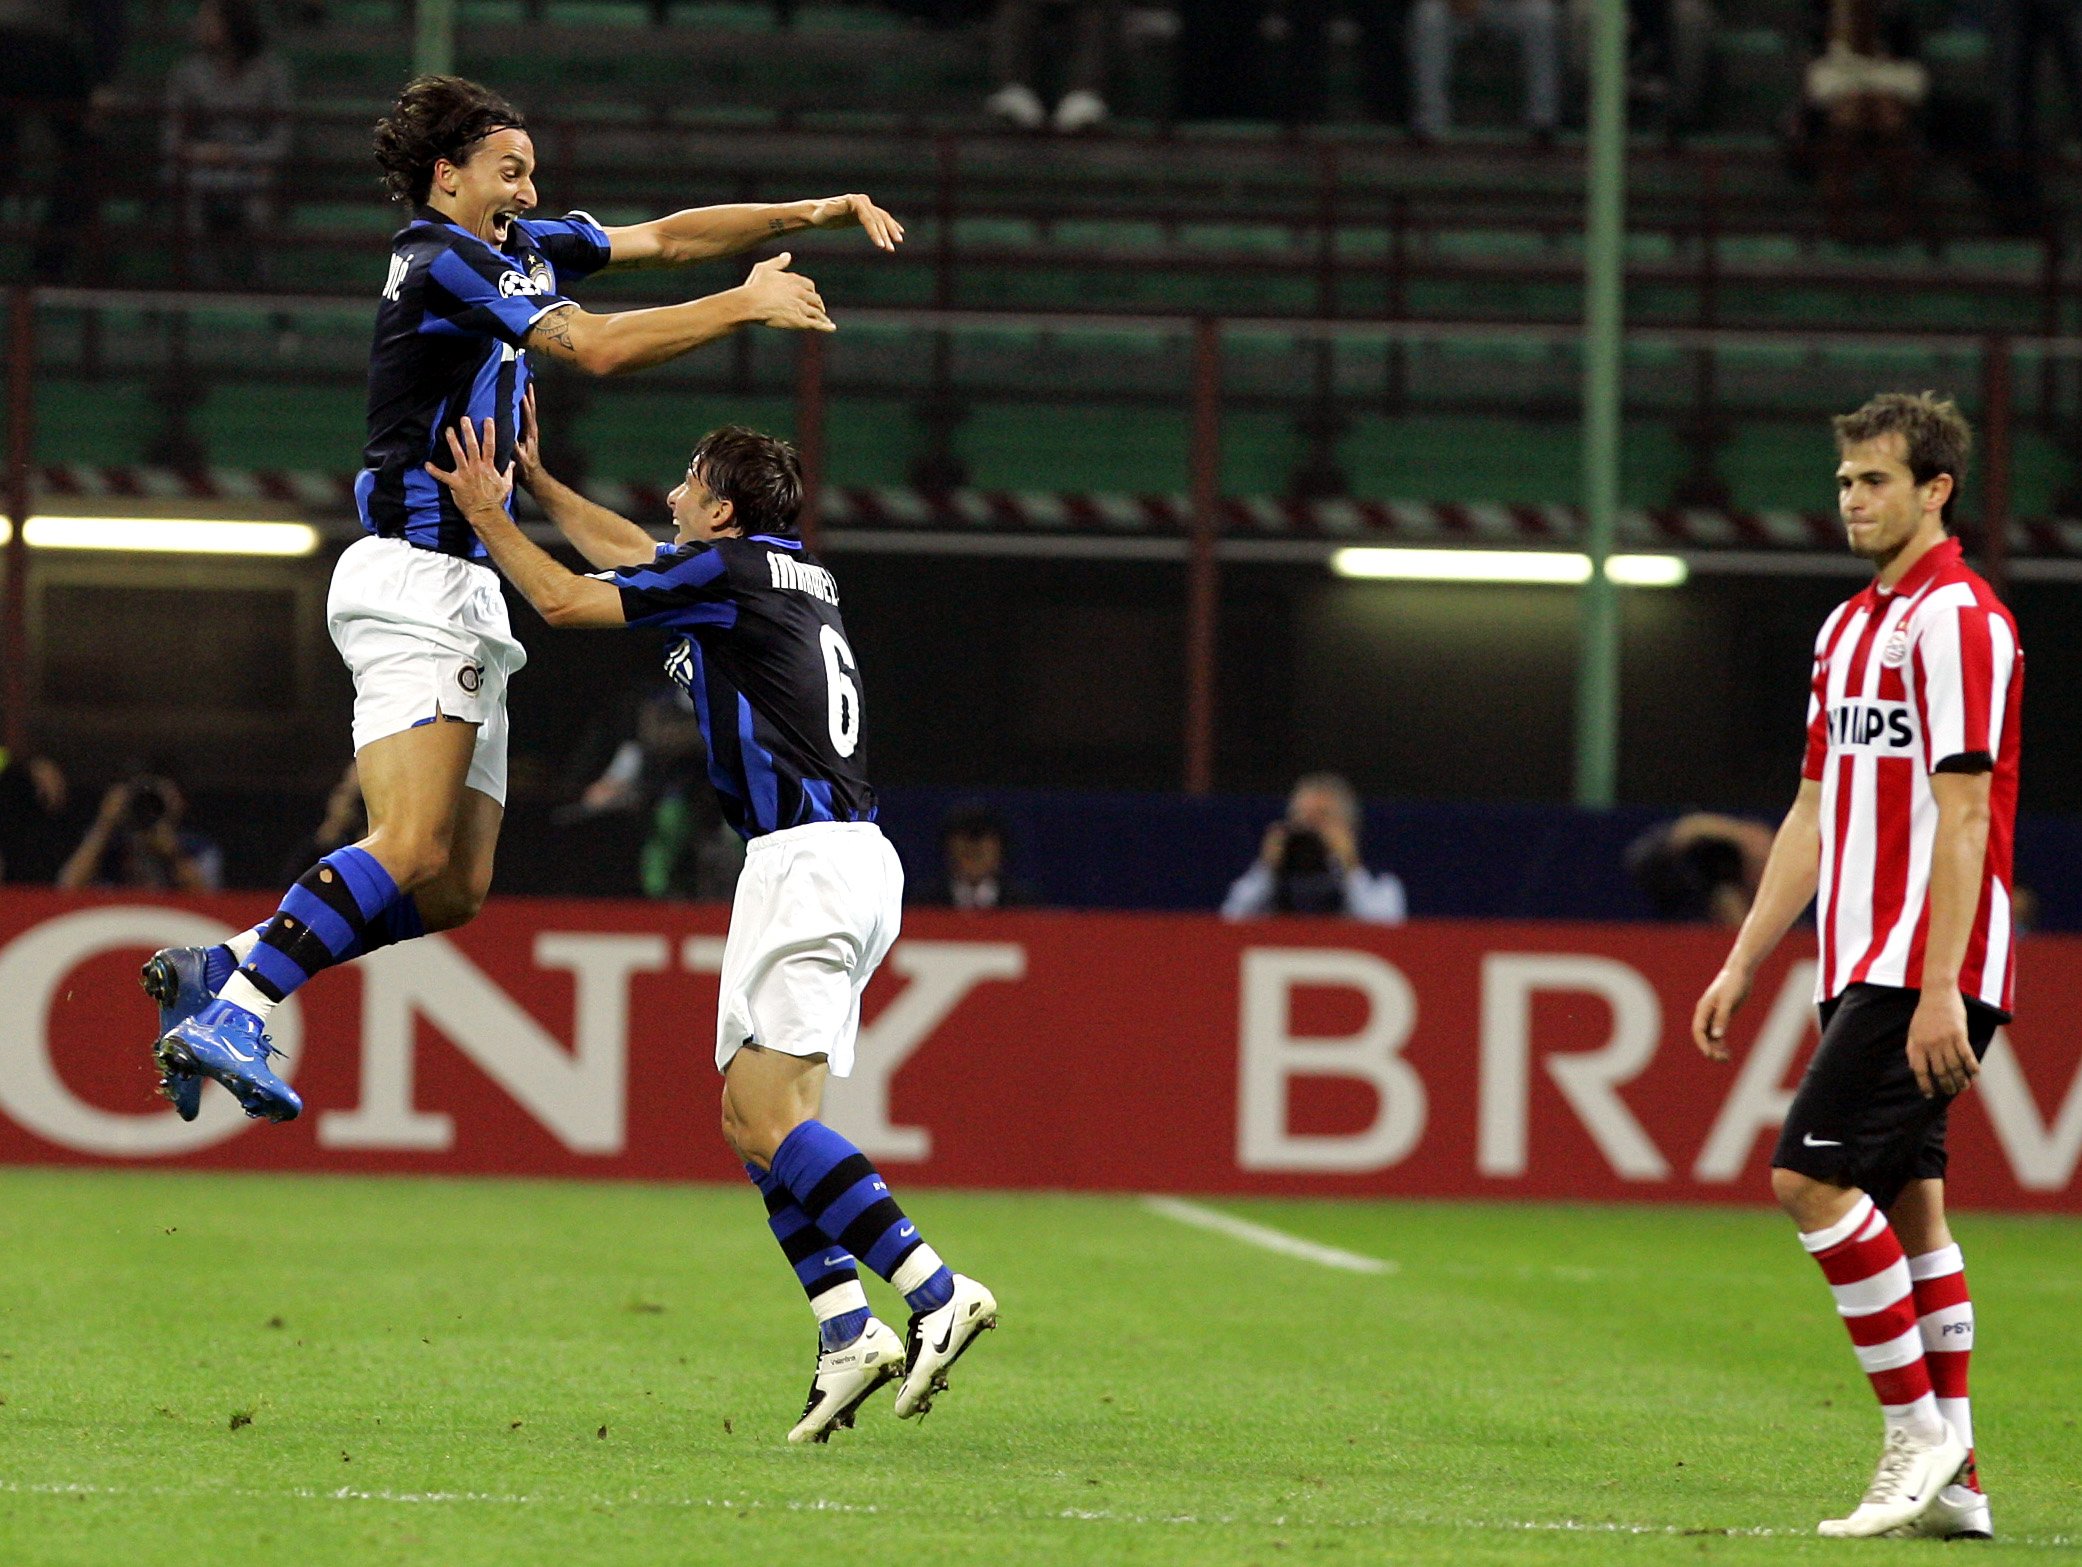 Fotboll, serie a, Italien, milan, Zlatan Ibrahimovic, PSG